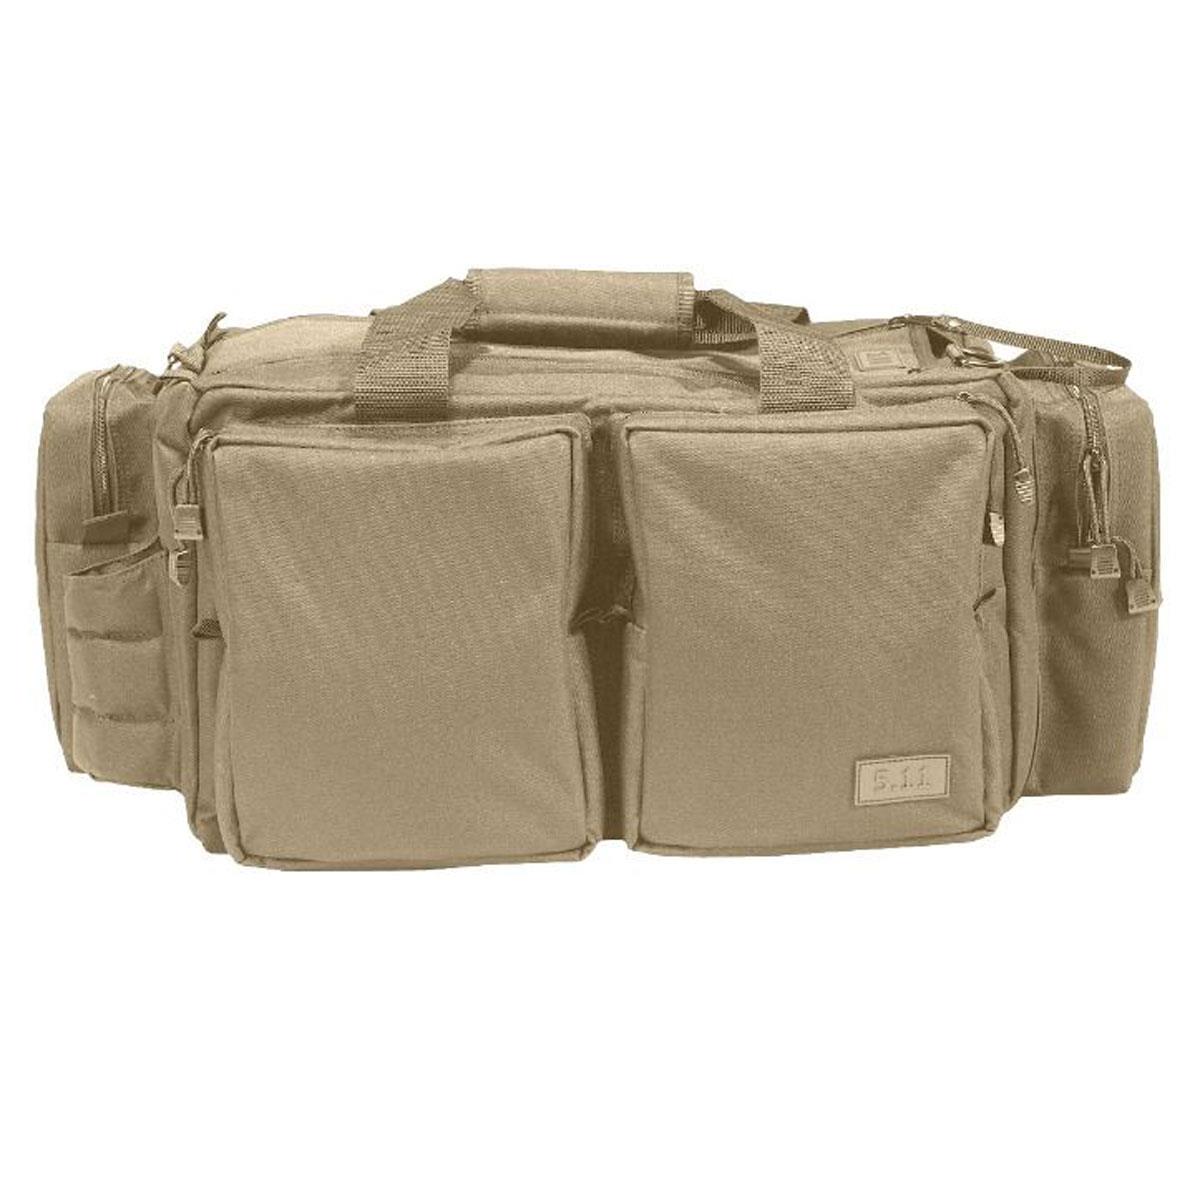 5.11 Tactical Range Ready Bag, Sandstone -  59049-328-1 SZ